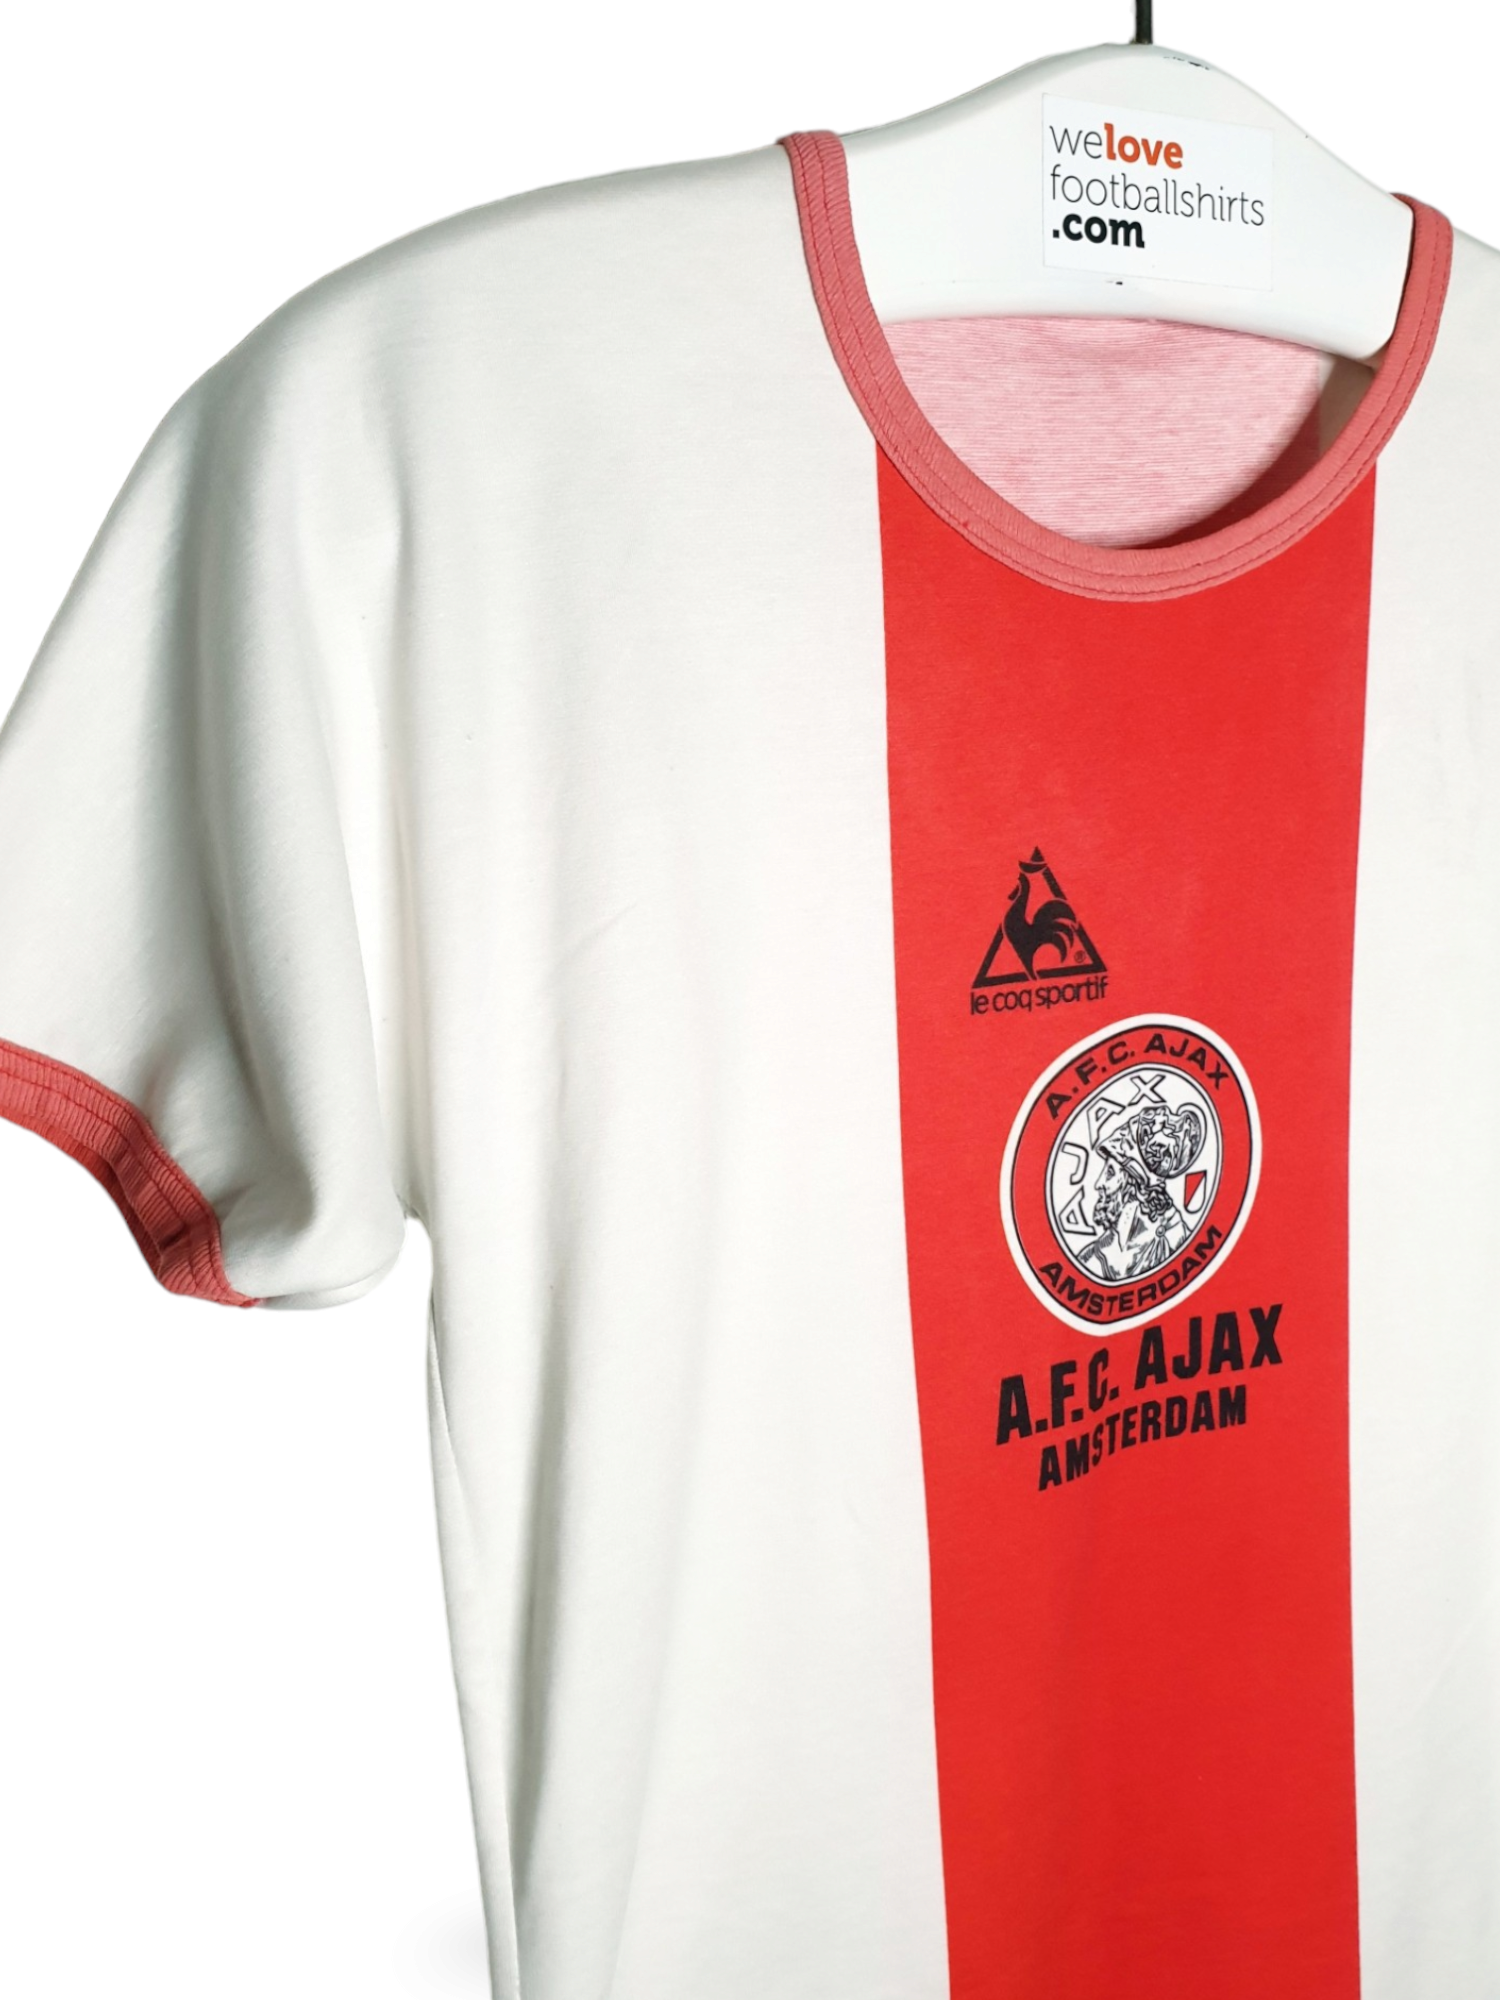 Fanwear cotton football vintage t-shirt AFC Ajax 70s -  Welovefootballshirts.com